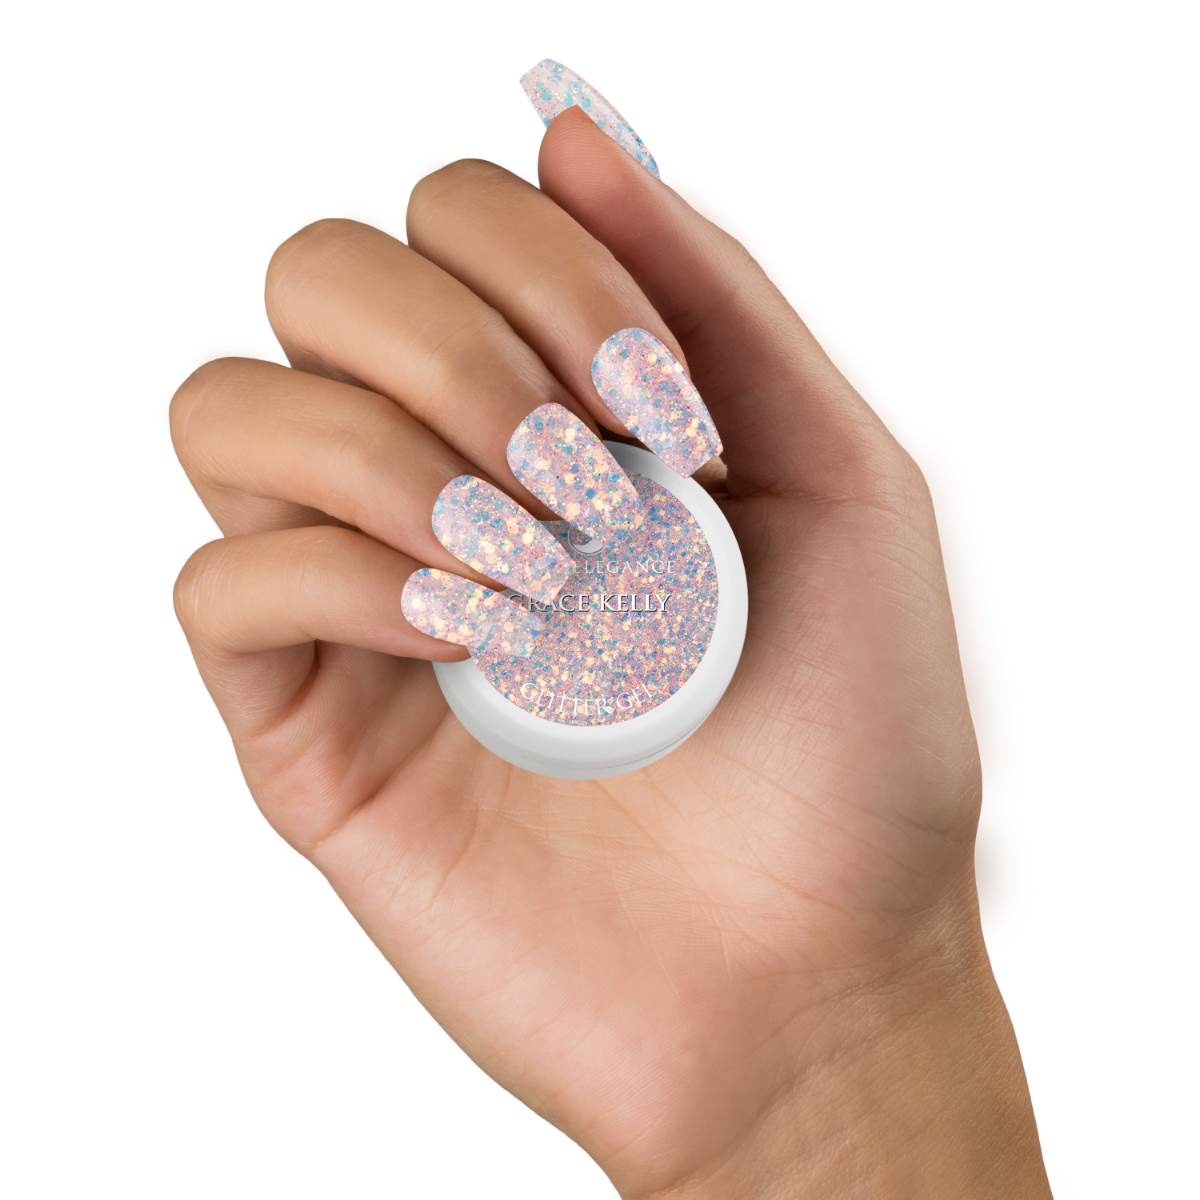 Light Elegance Glitter Gel - Grace Kelly :: New Packaging - Creata Beauty - Professional Beauty Products